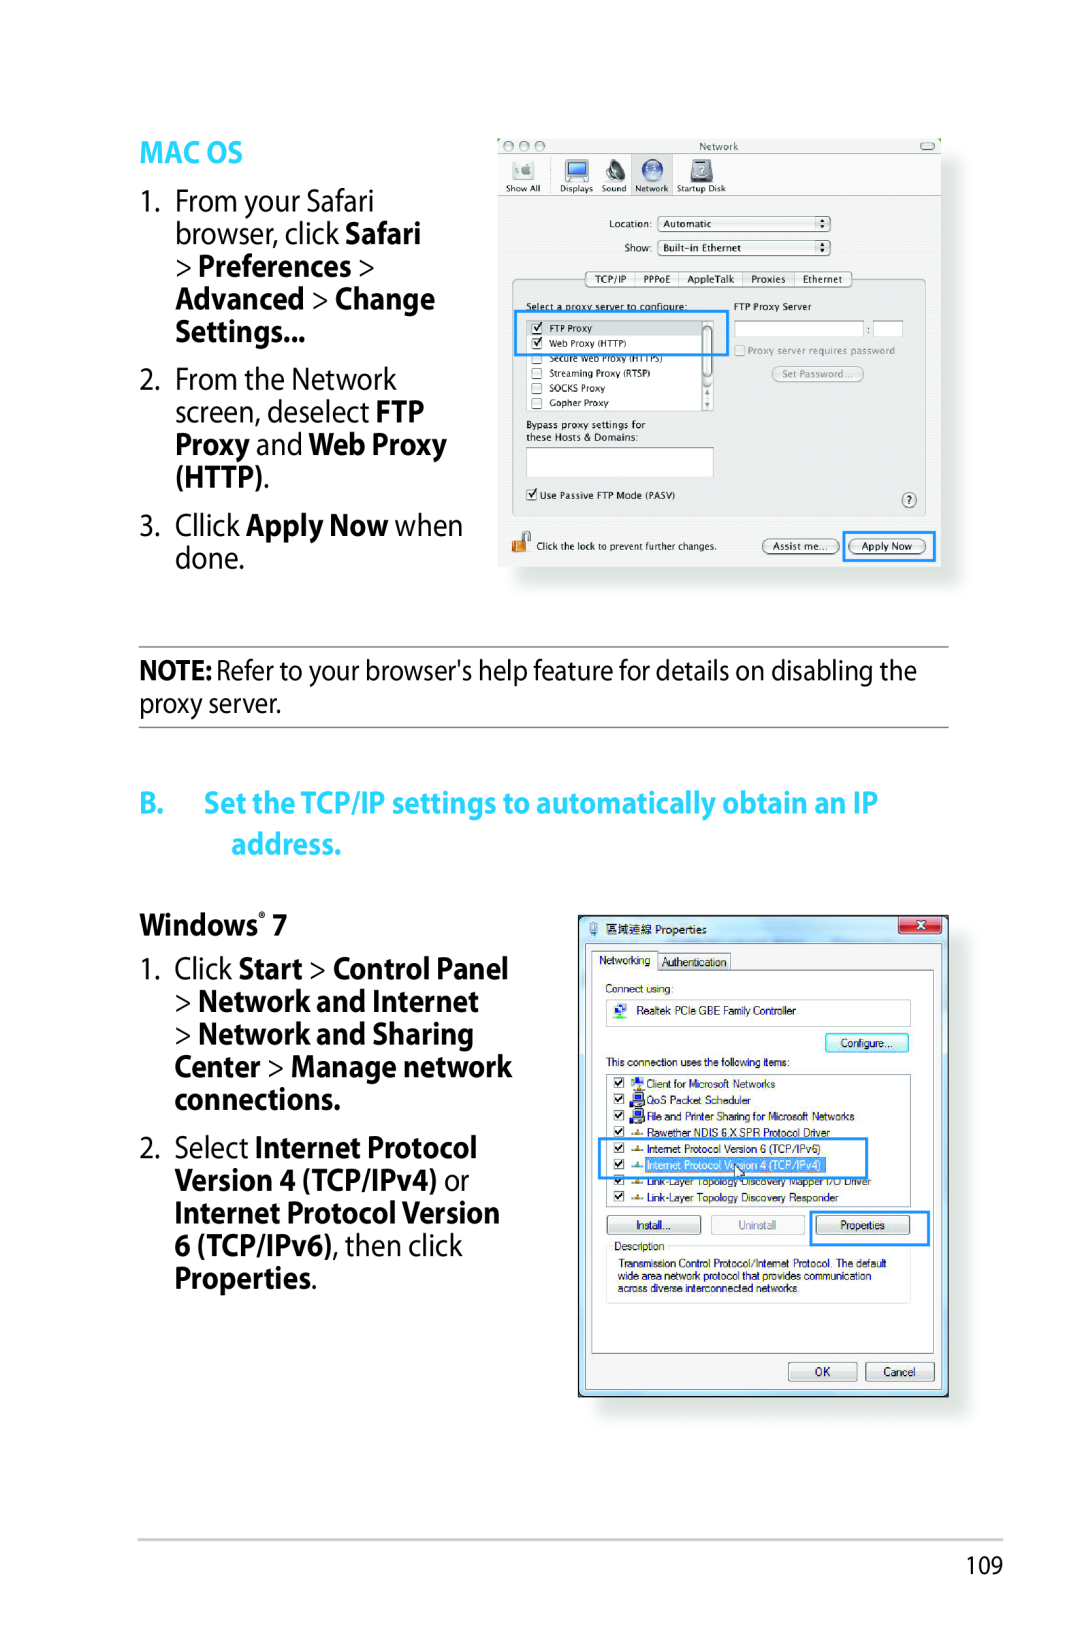 Asus RTAC68U manual Mac Os, Settings, B. Set the TCP/IP settings to automatically obtain an IP address 